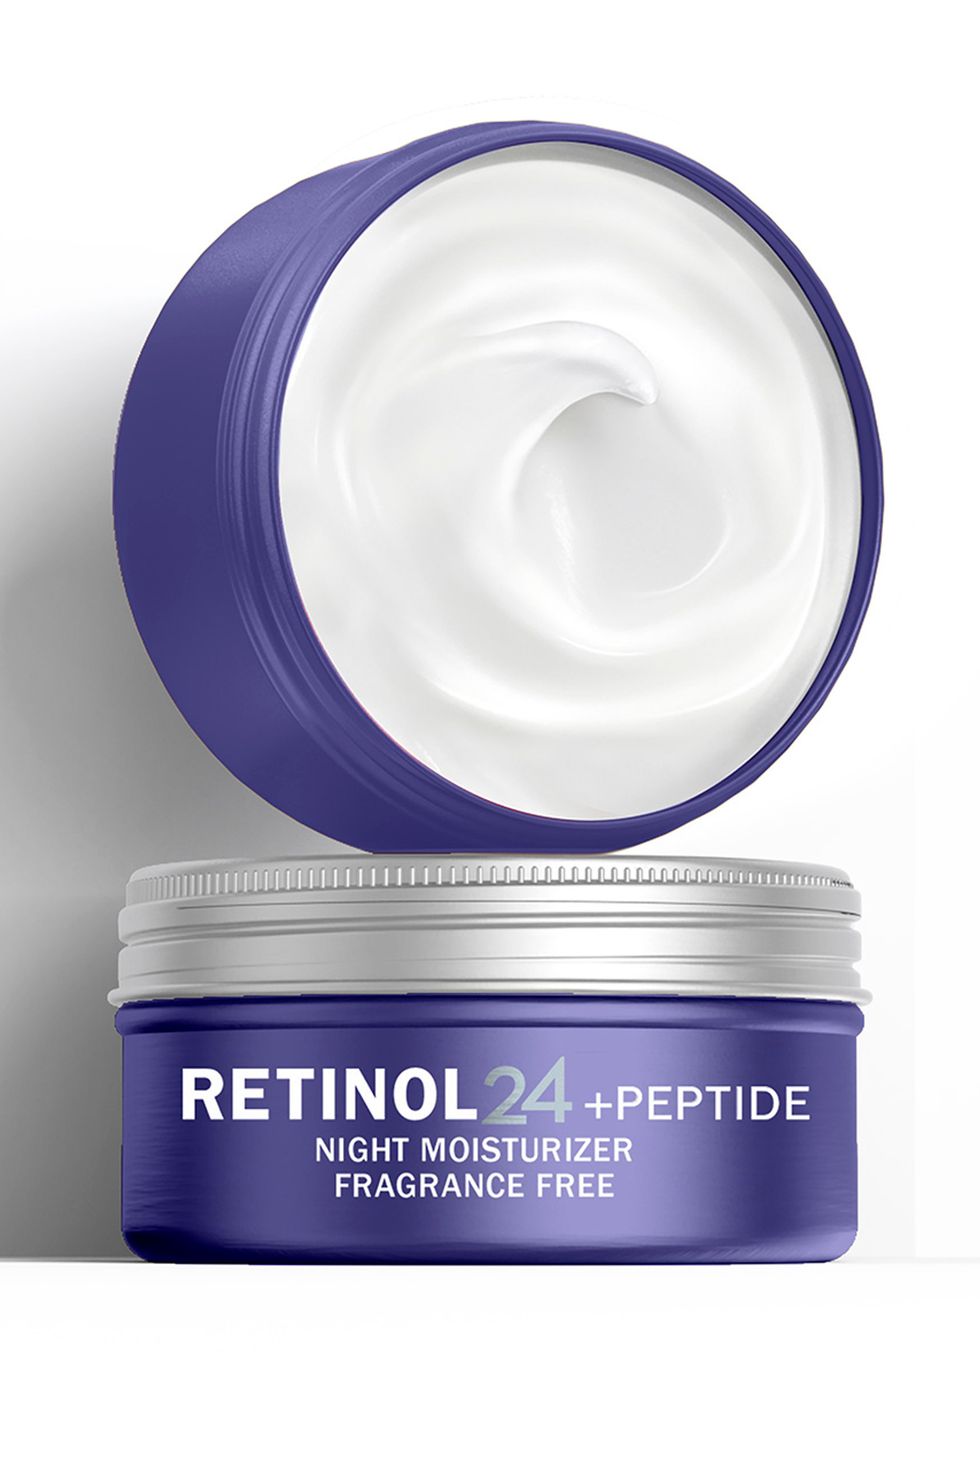 Retinol 24 + Peptide Night Moisturizer